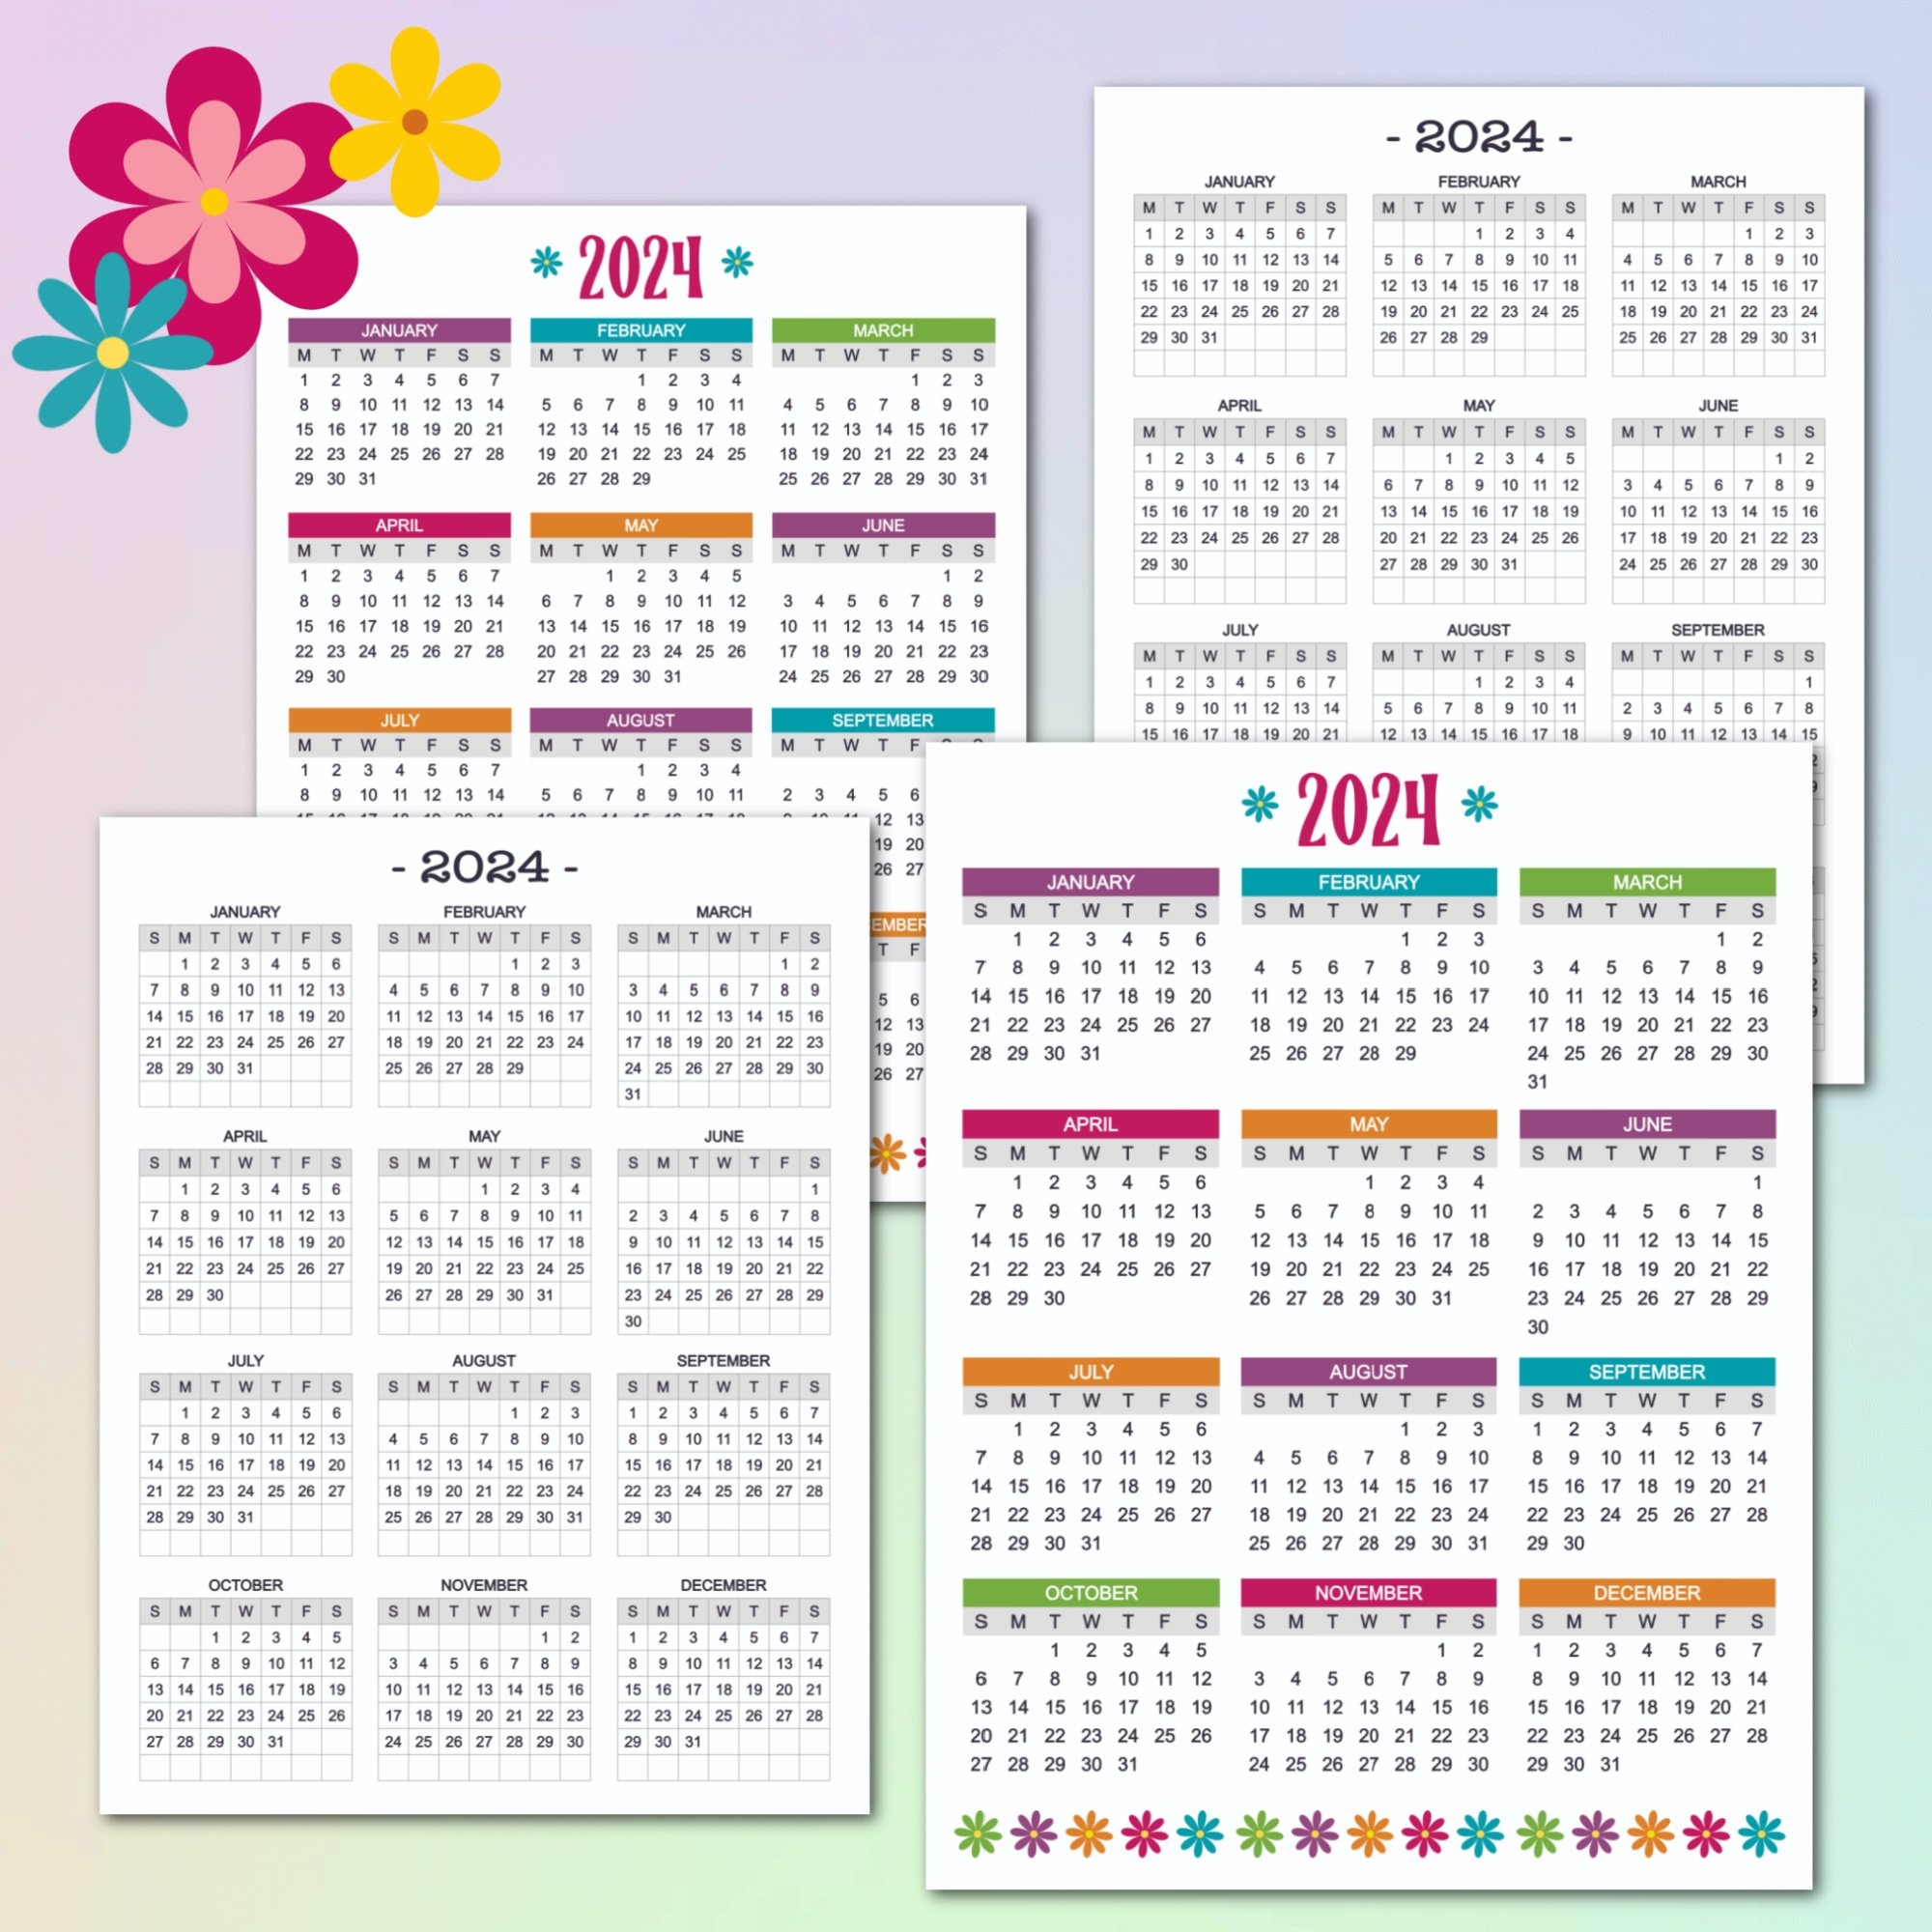 Free Printable 2024 Year-At-A-Glance Calendar — Krafty Planner in Free Printable Calendar 2024 Year At A Glance